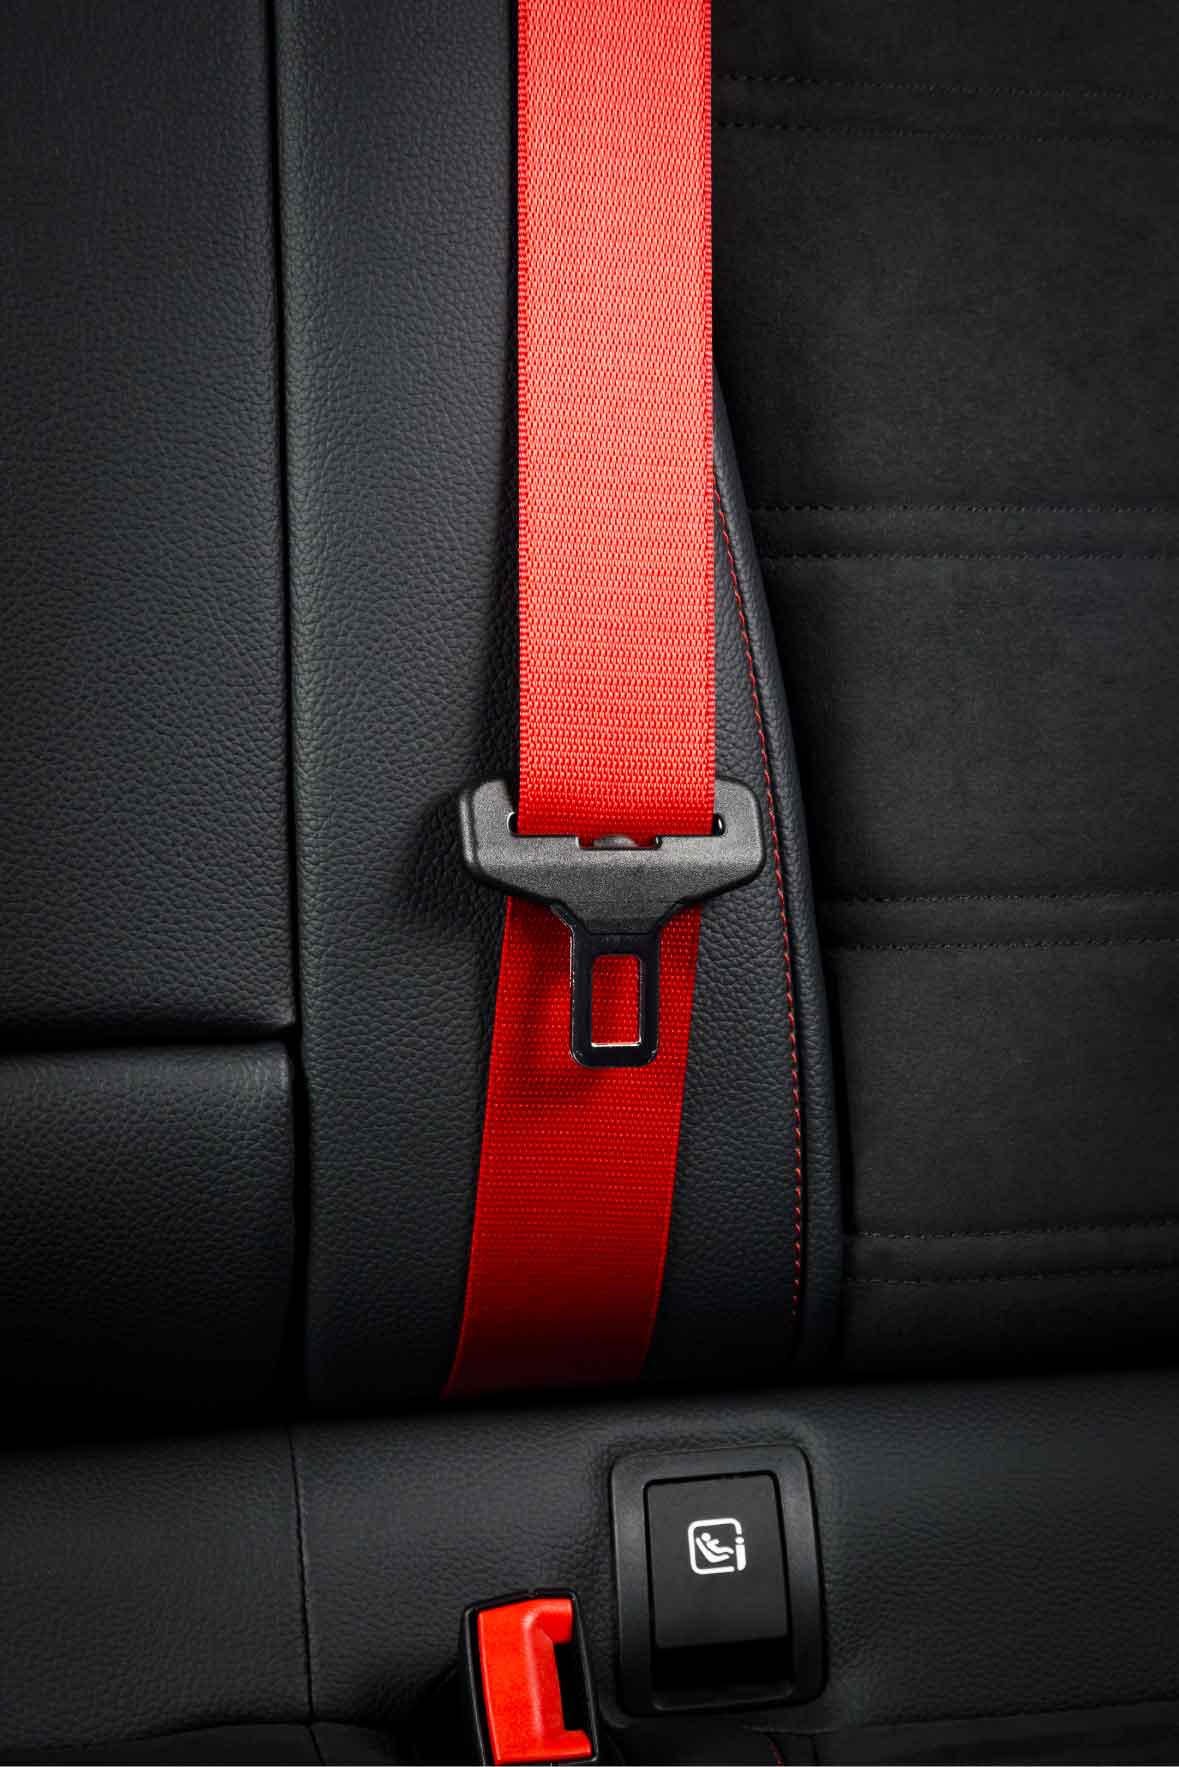 Optional Add-On - Seat Belts